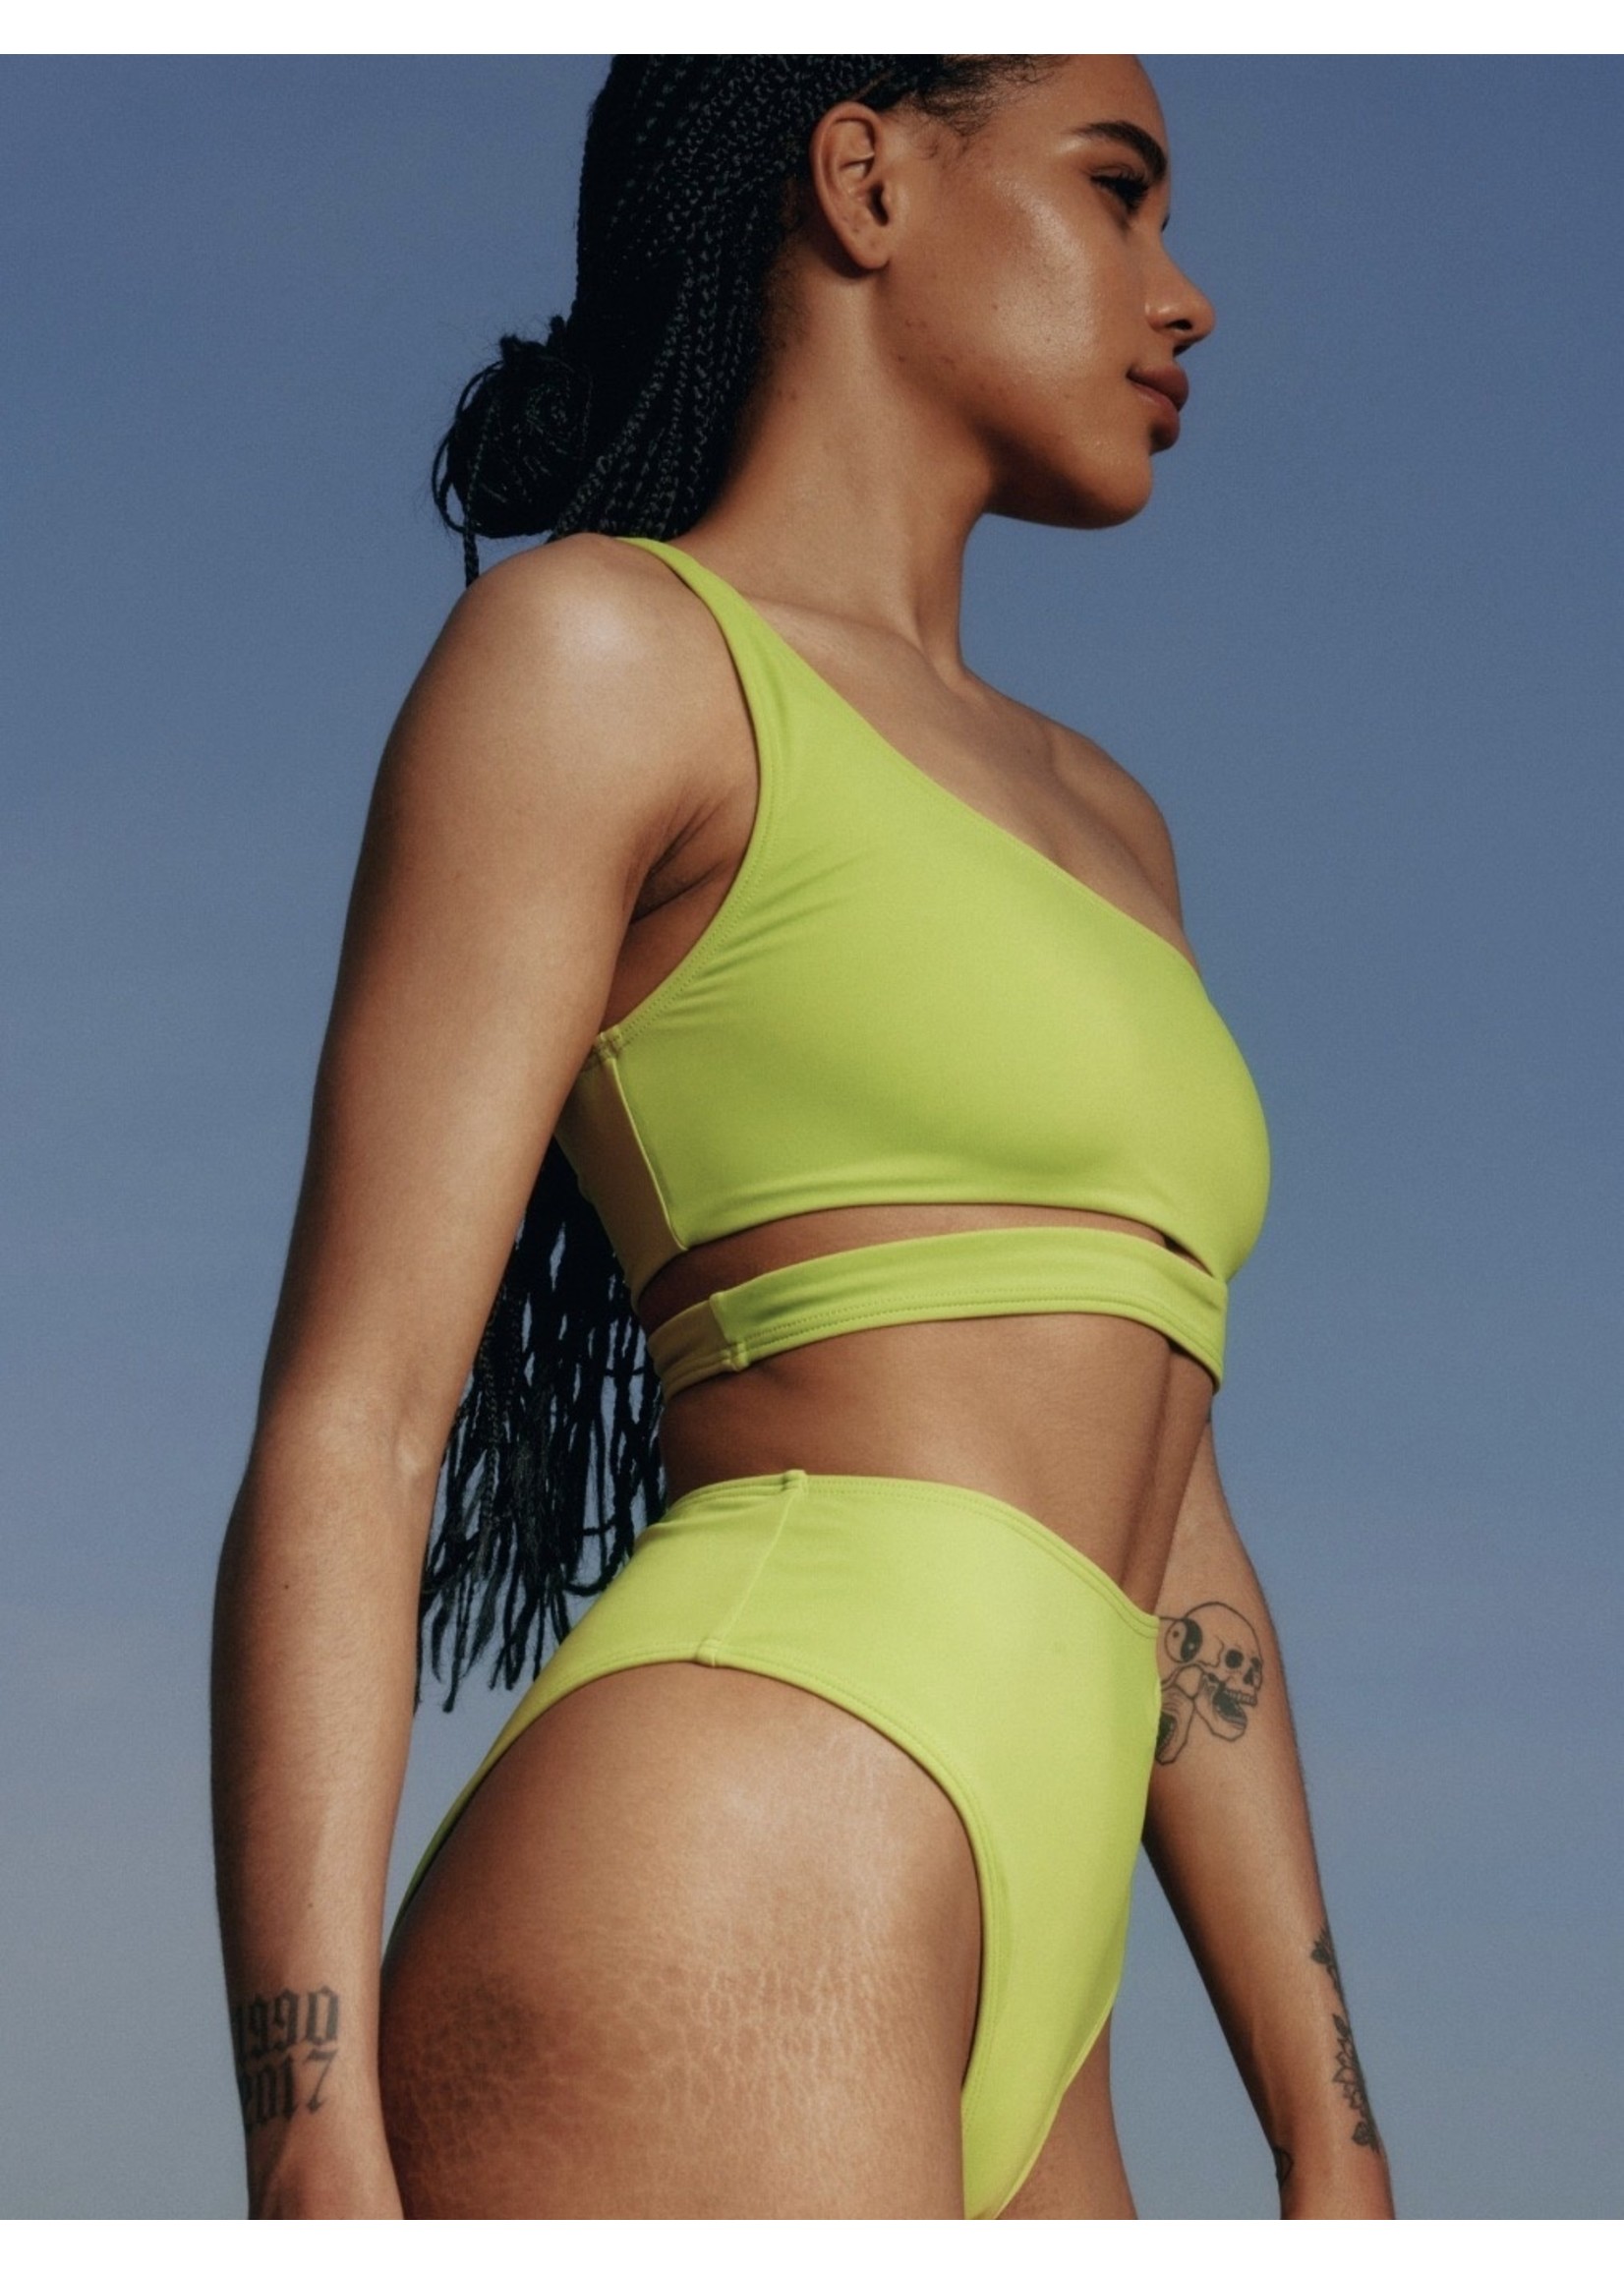 Blush Lingerie 'Jade' Asymmetric Bikini Top by Blush Lingerie